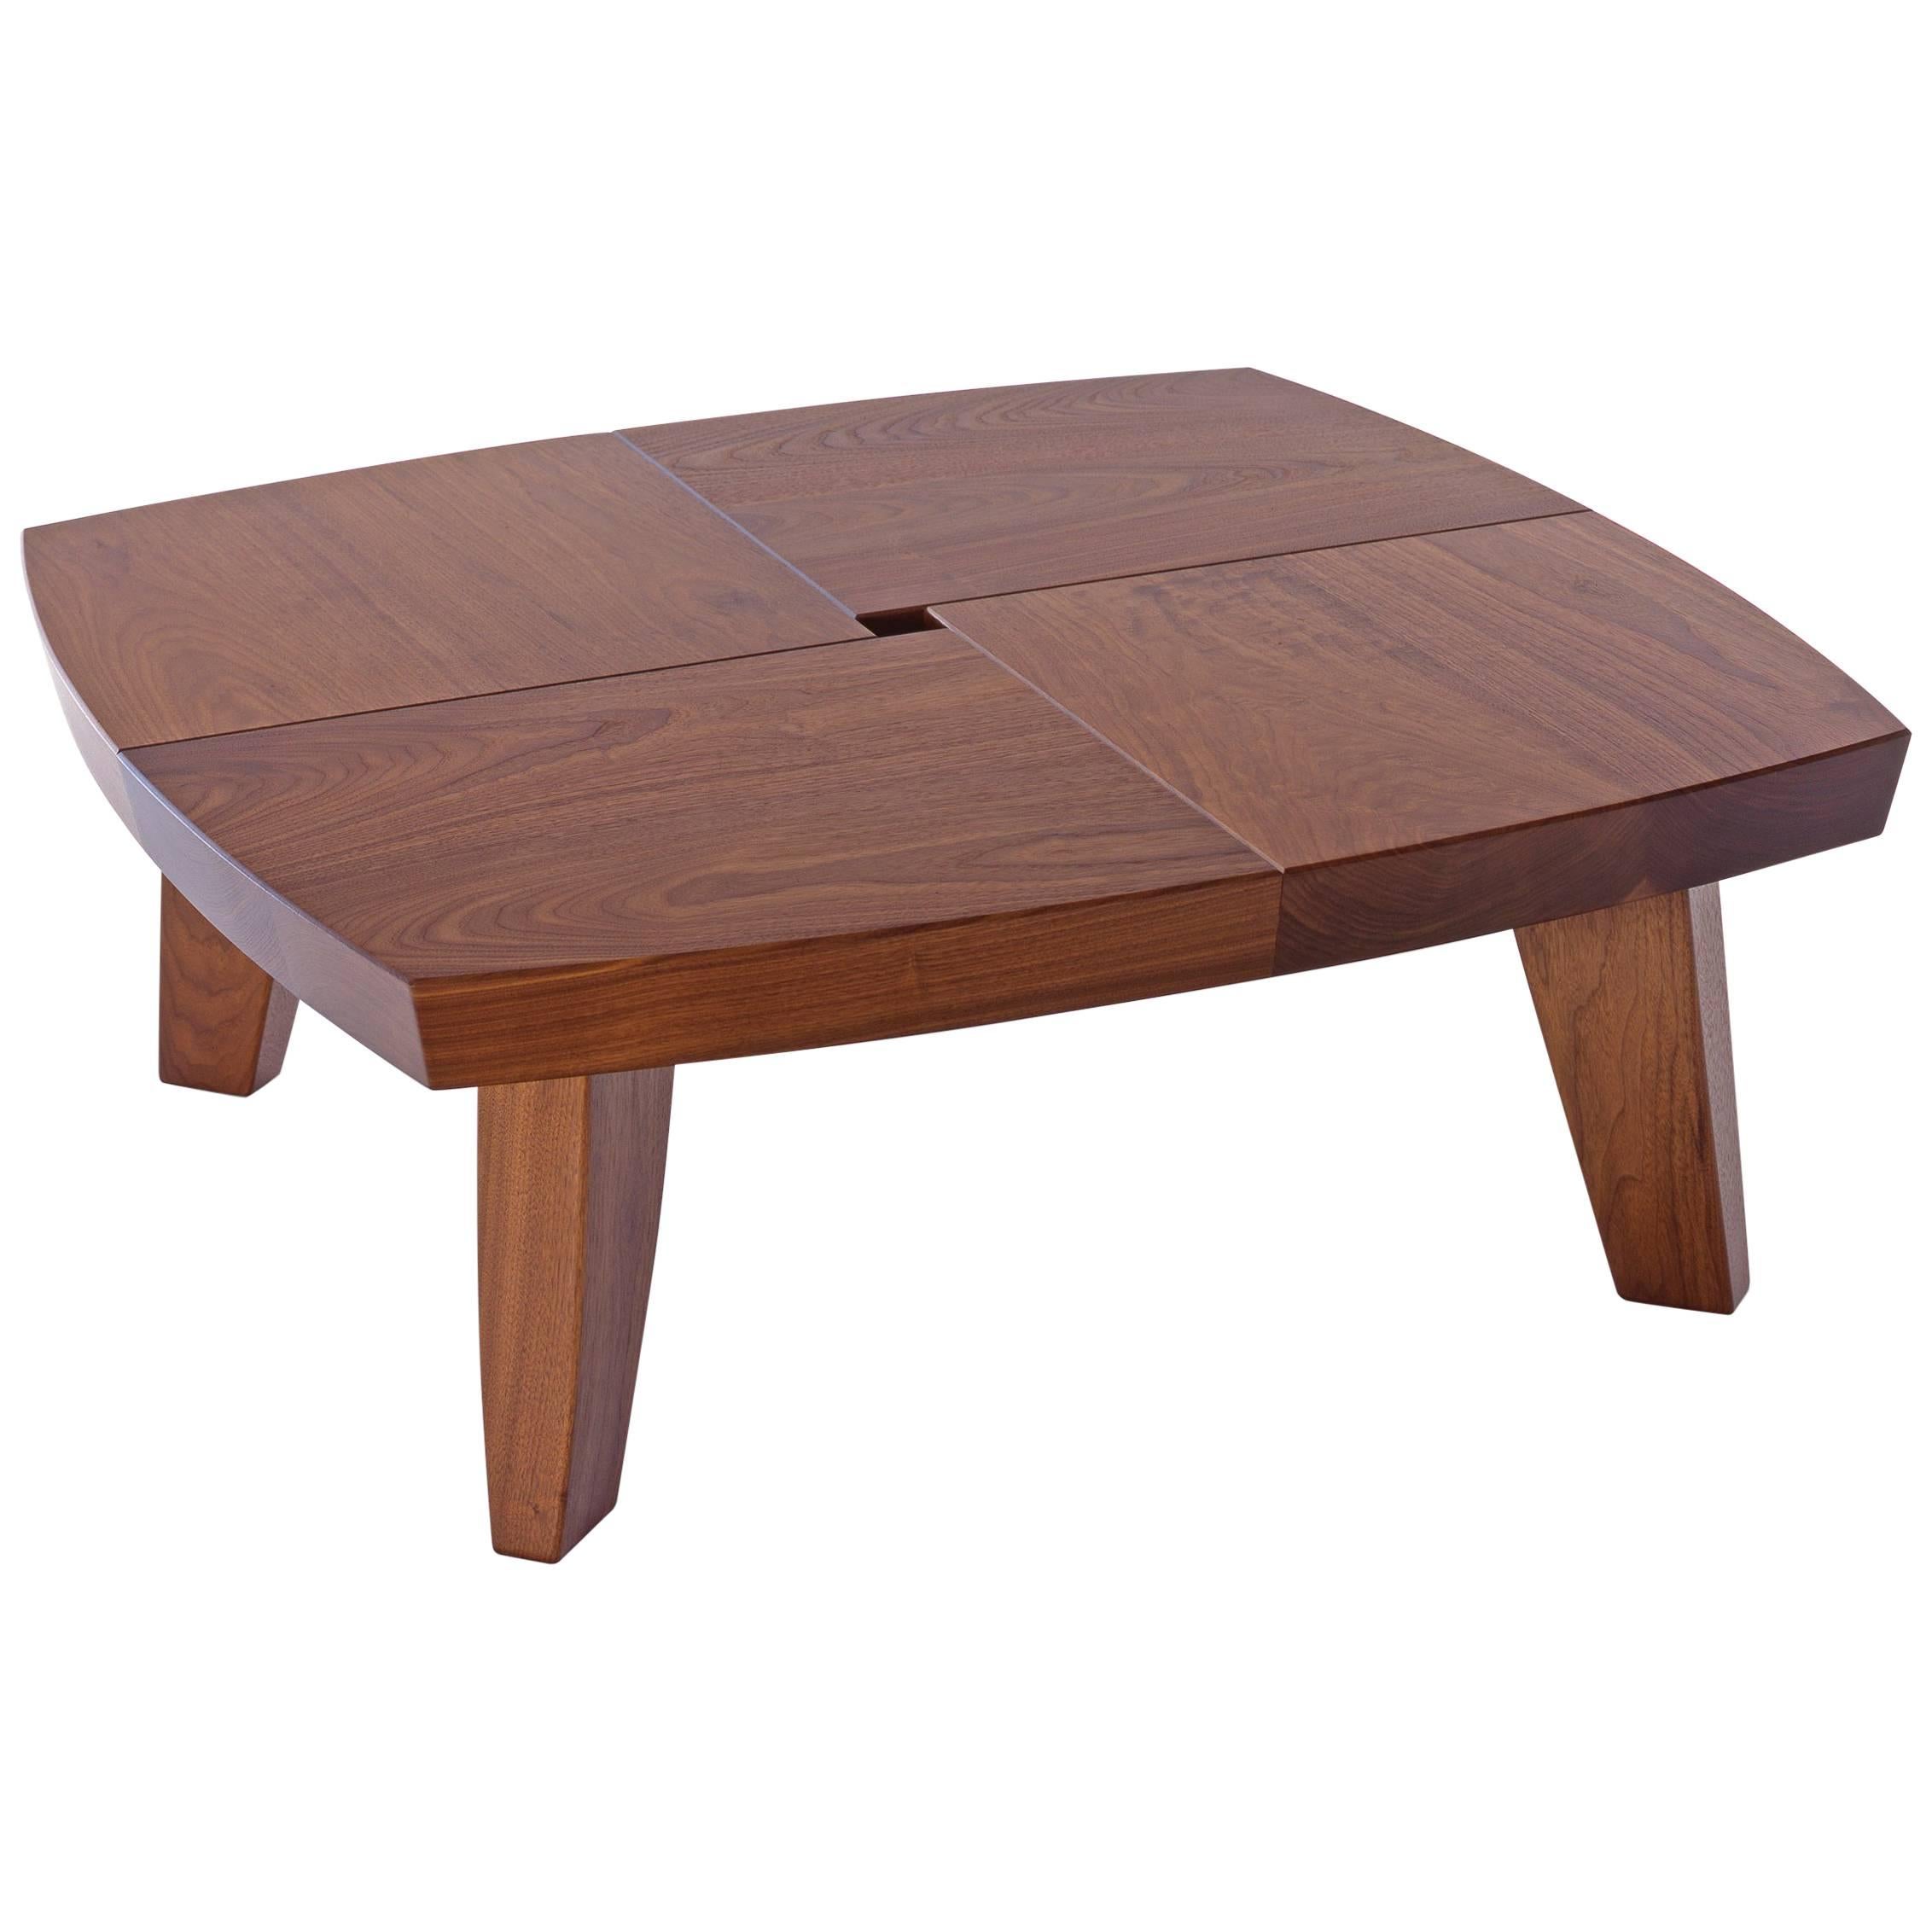 Angela Adams Sea Turtle Coffee Table, Walnut, Solid Wood, Handcrafted, Modern For Sale